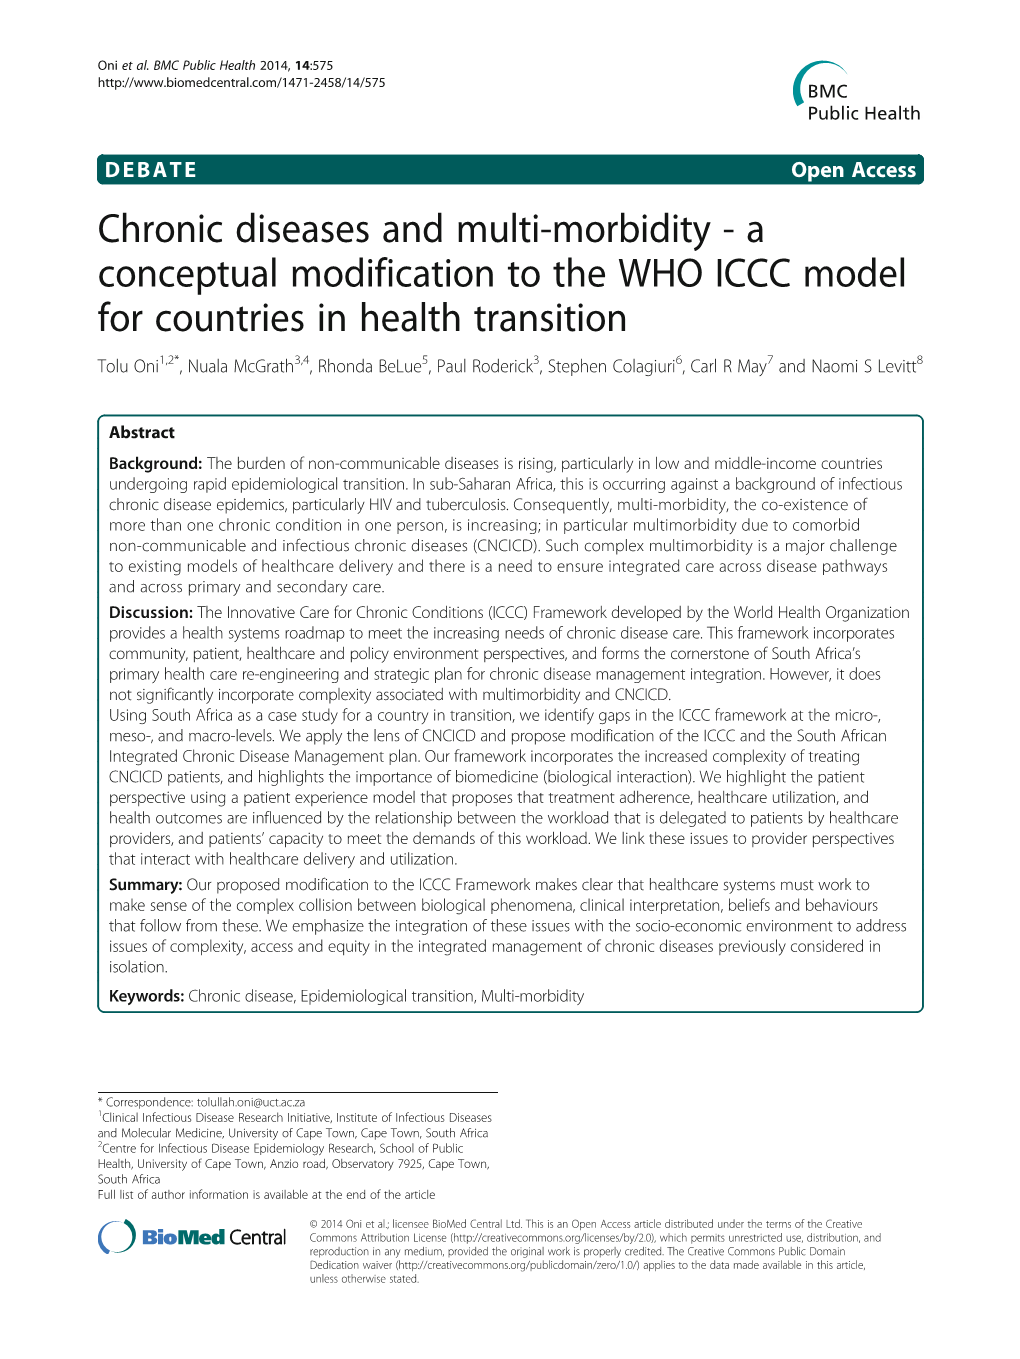 Chronic Diseases and Multi-Morbidity